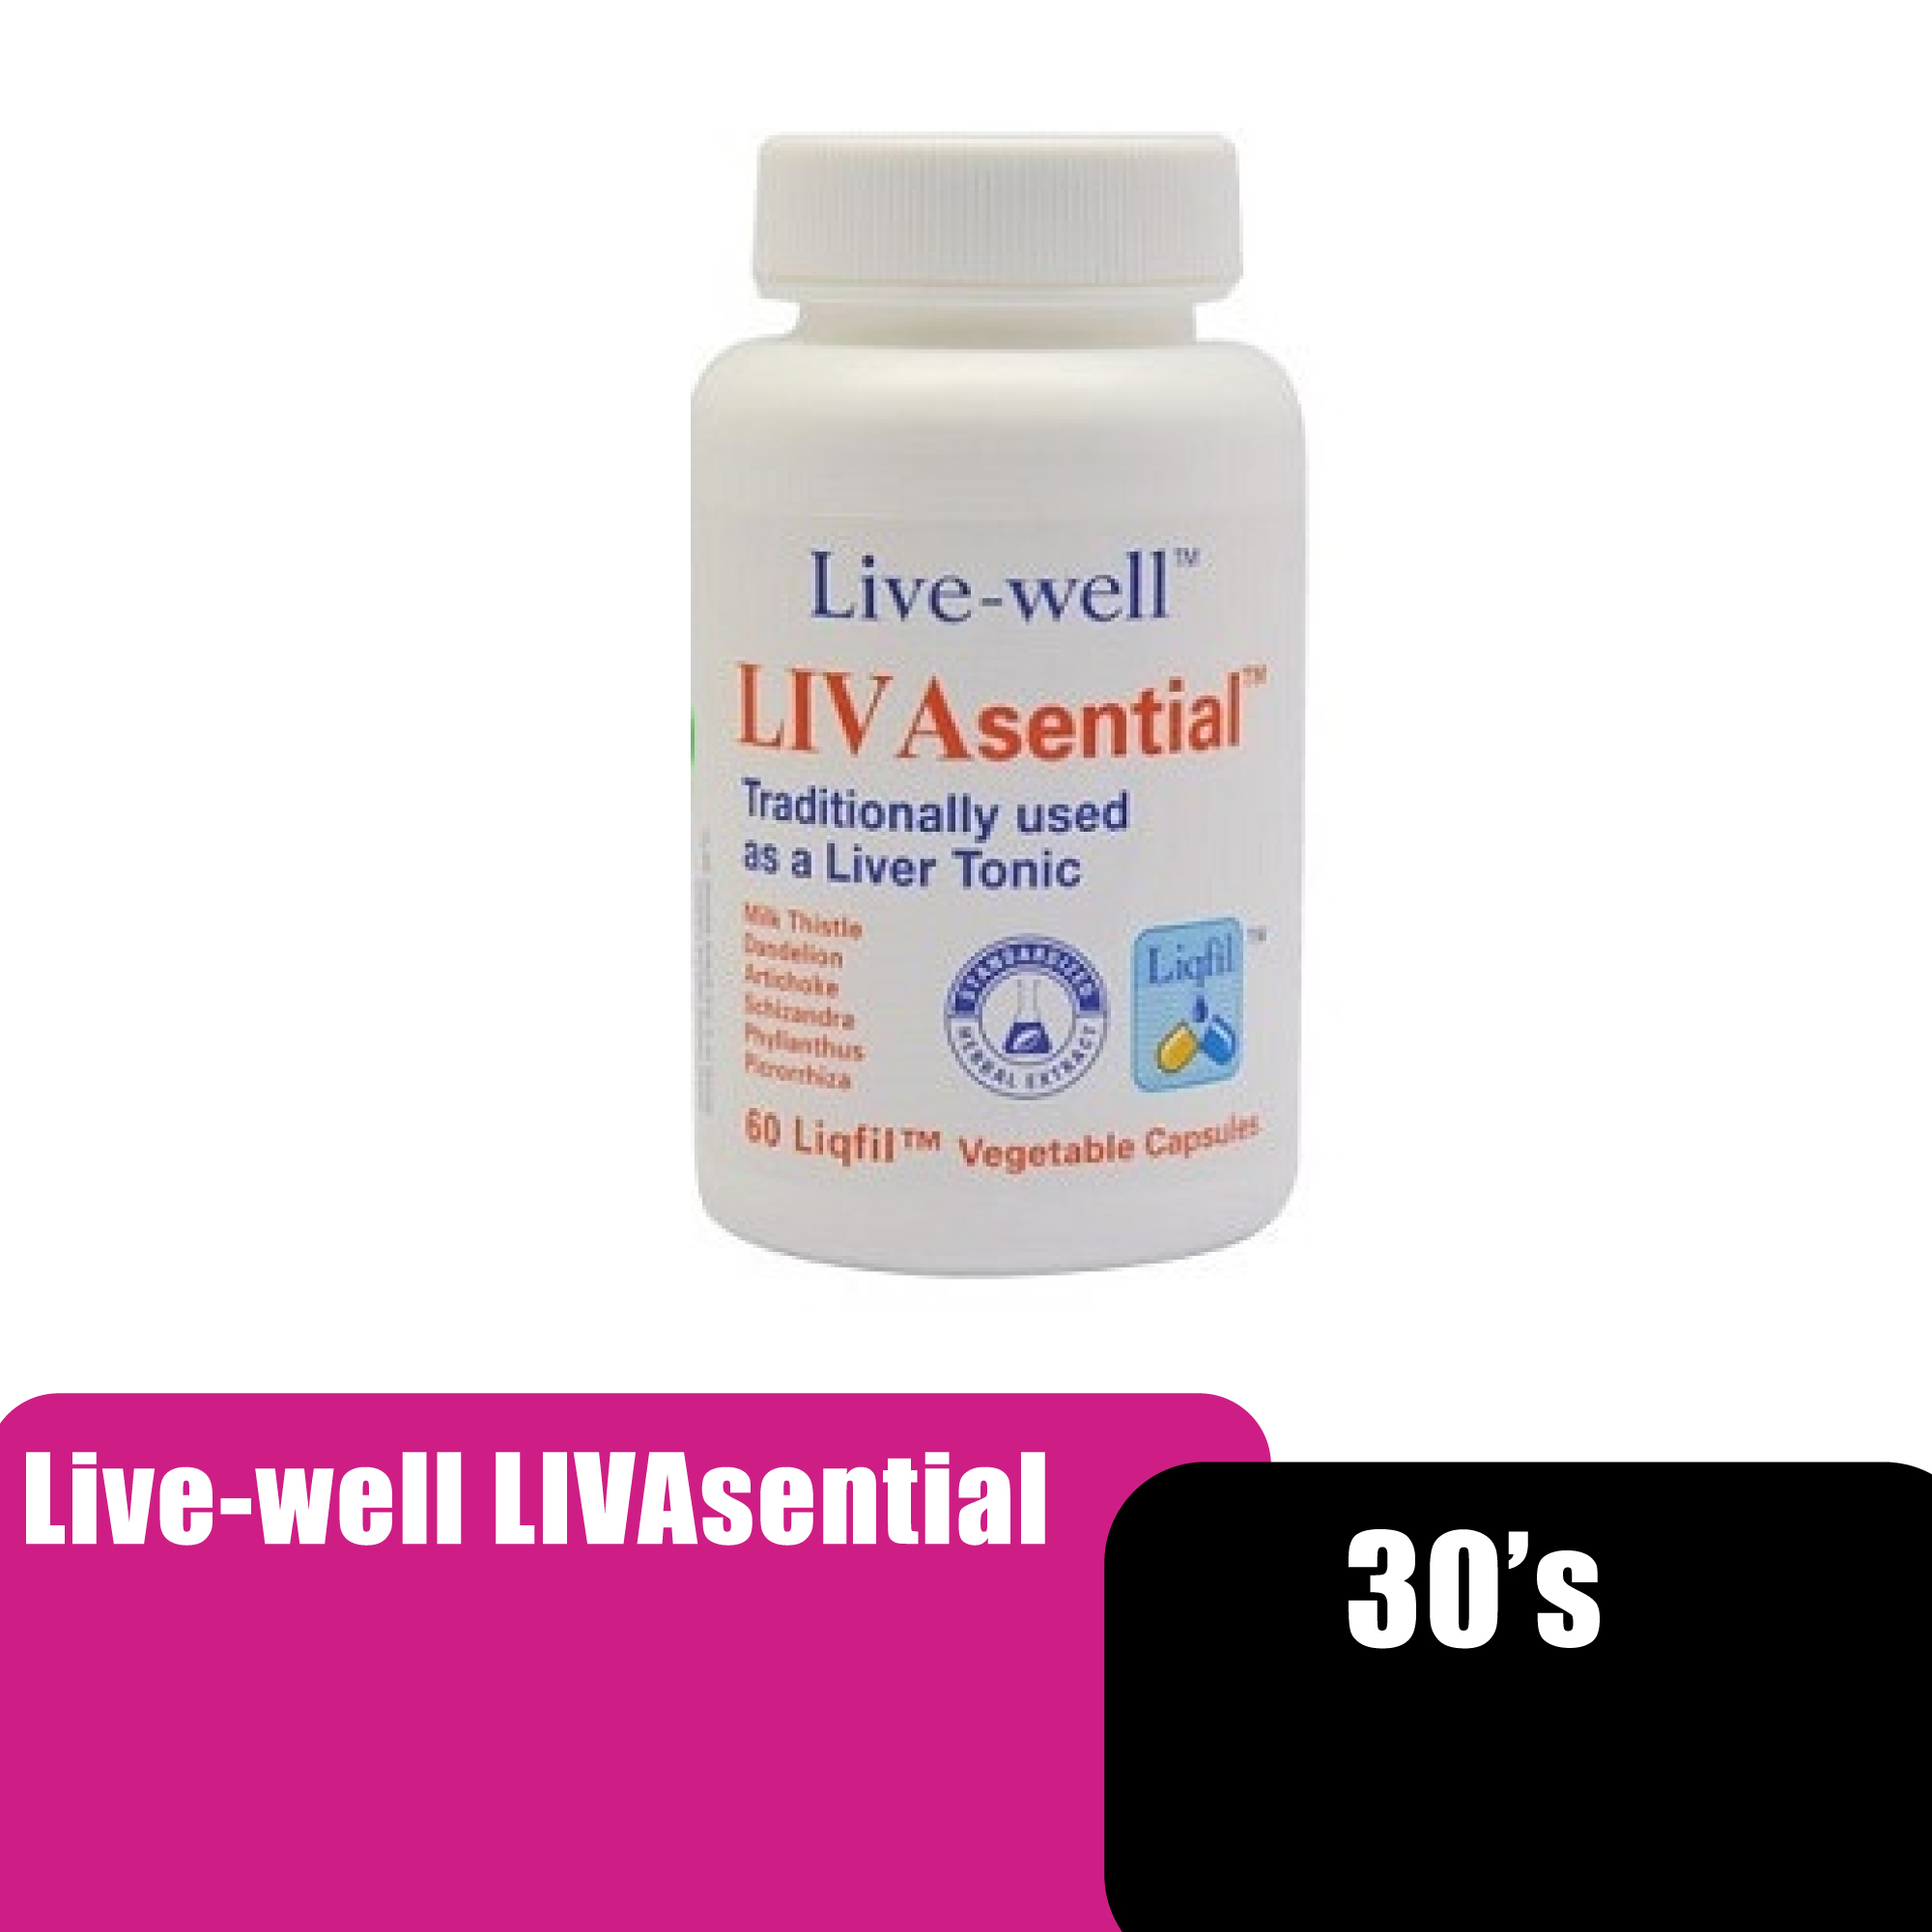 Live-Well Livasential Milk thistle (herbal formula) 30's - vegetable capsule supplement for liver /护肝,肝保健品